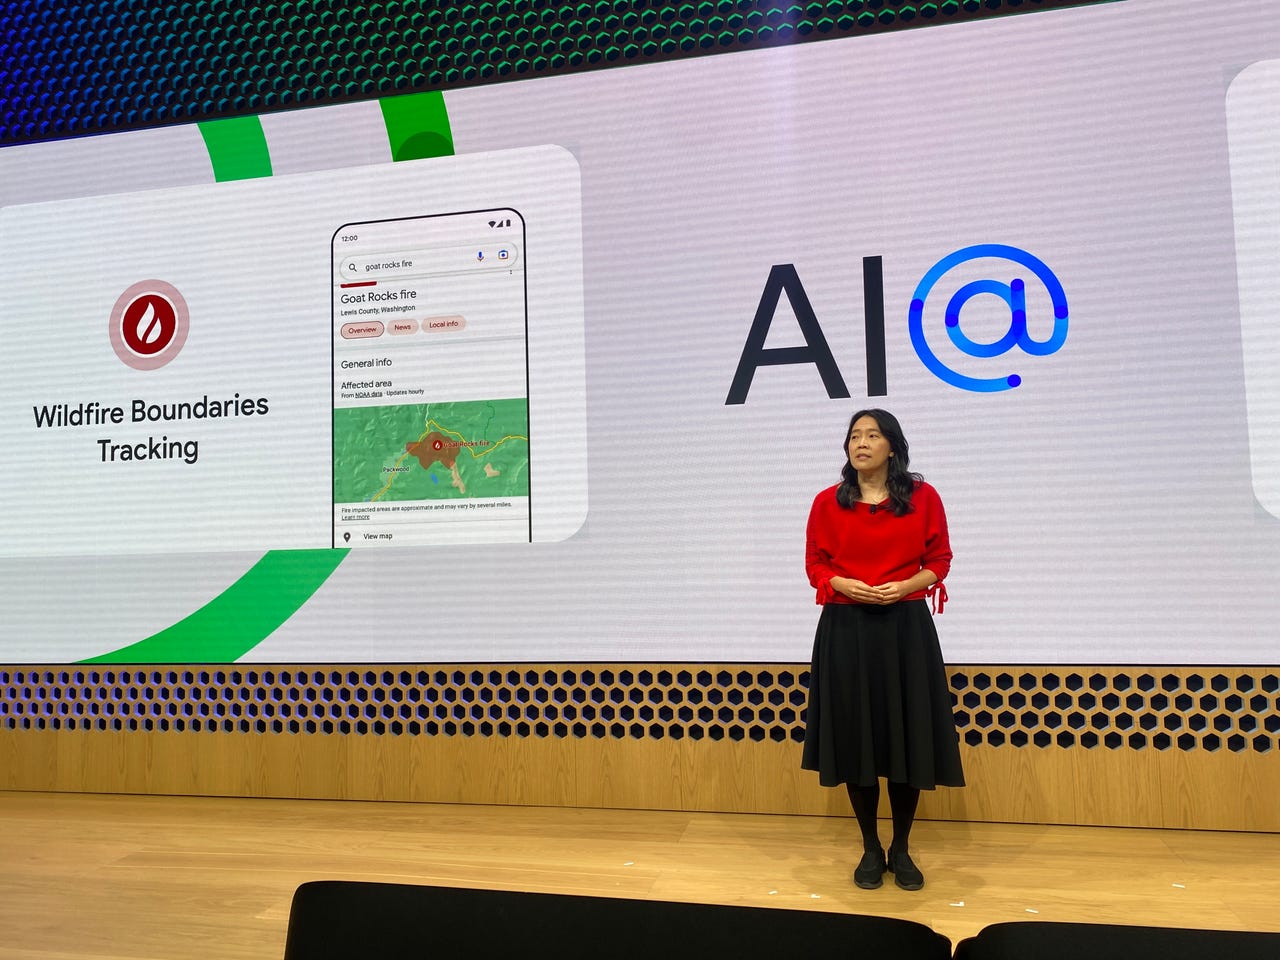 Google AI Keynote, Senior director on stage